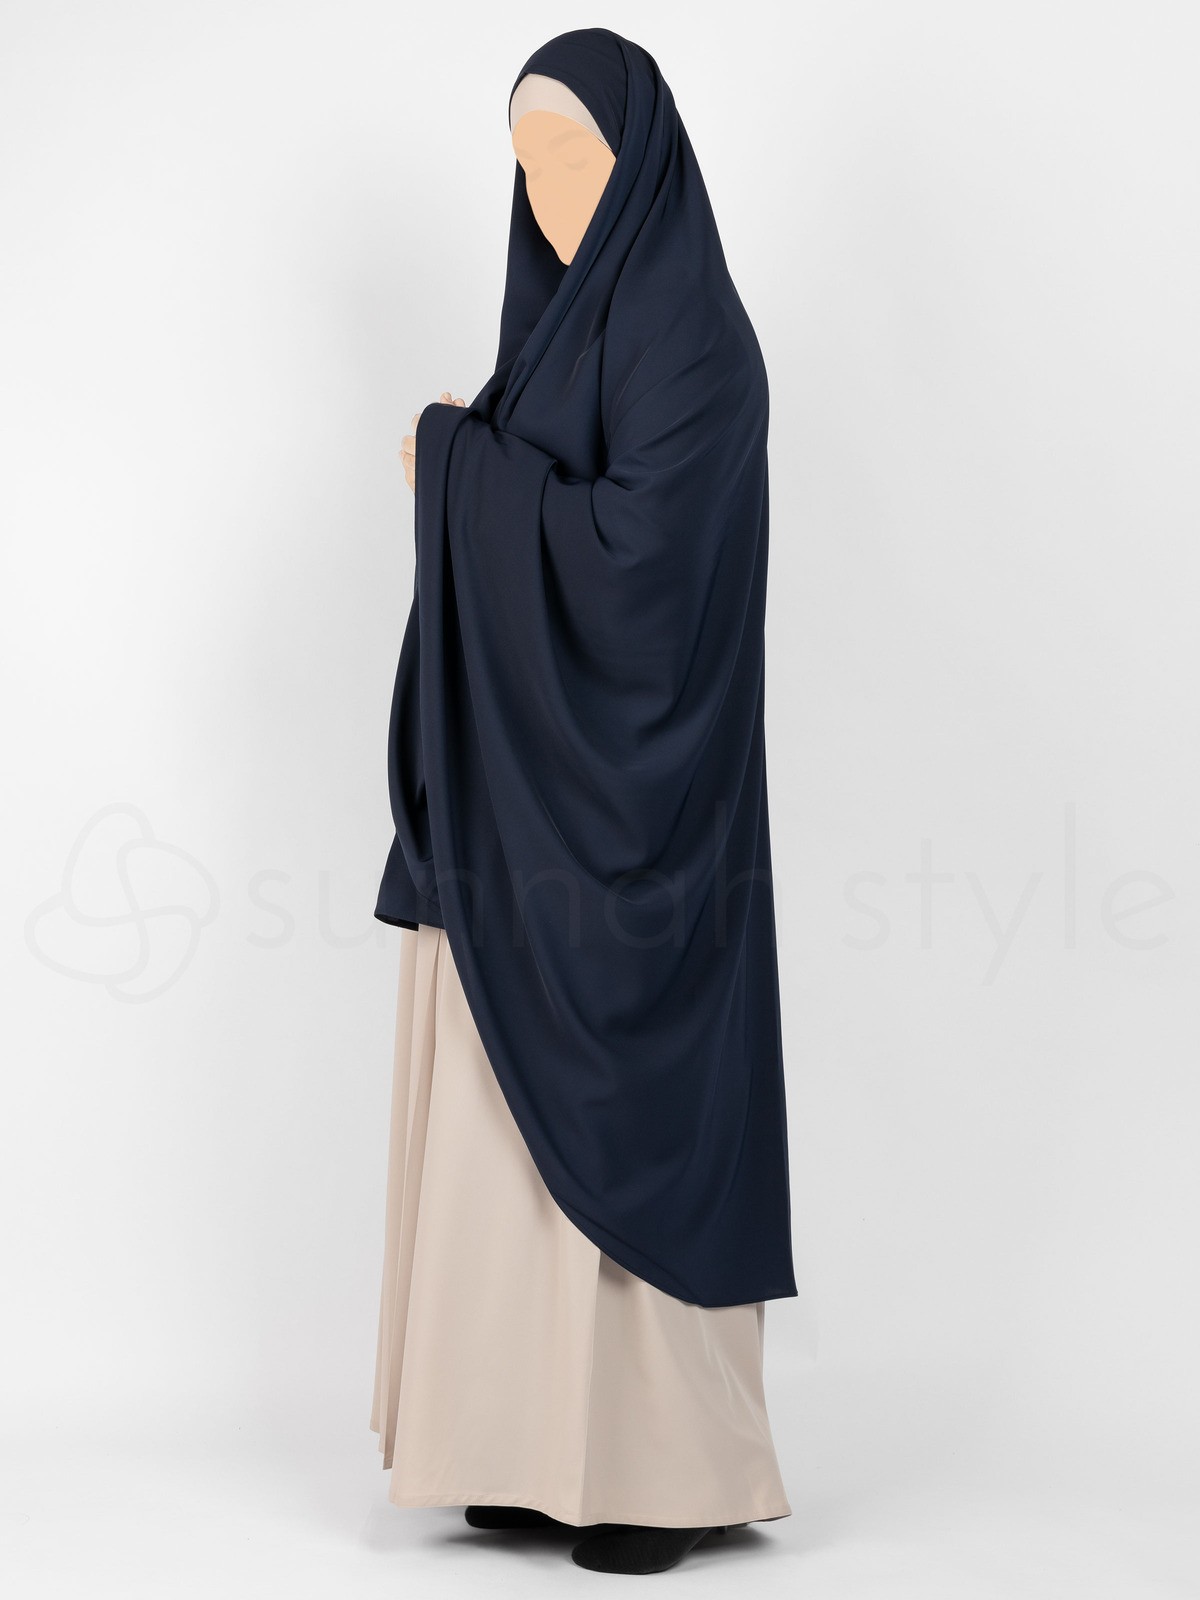 Sunnah Style - Essentials Khimar - Full Length (Navy Blue)